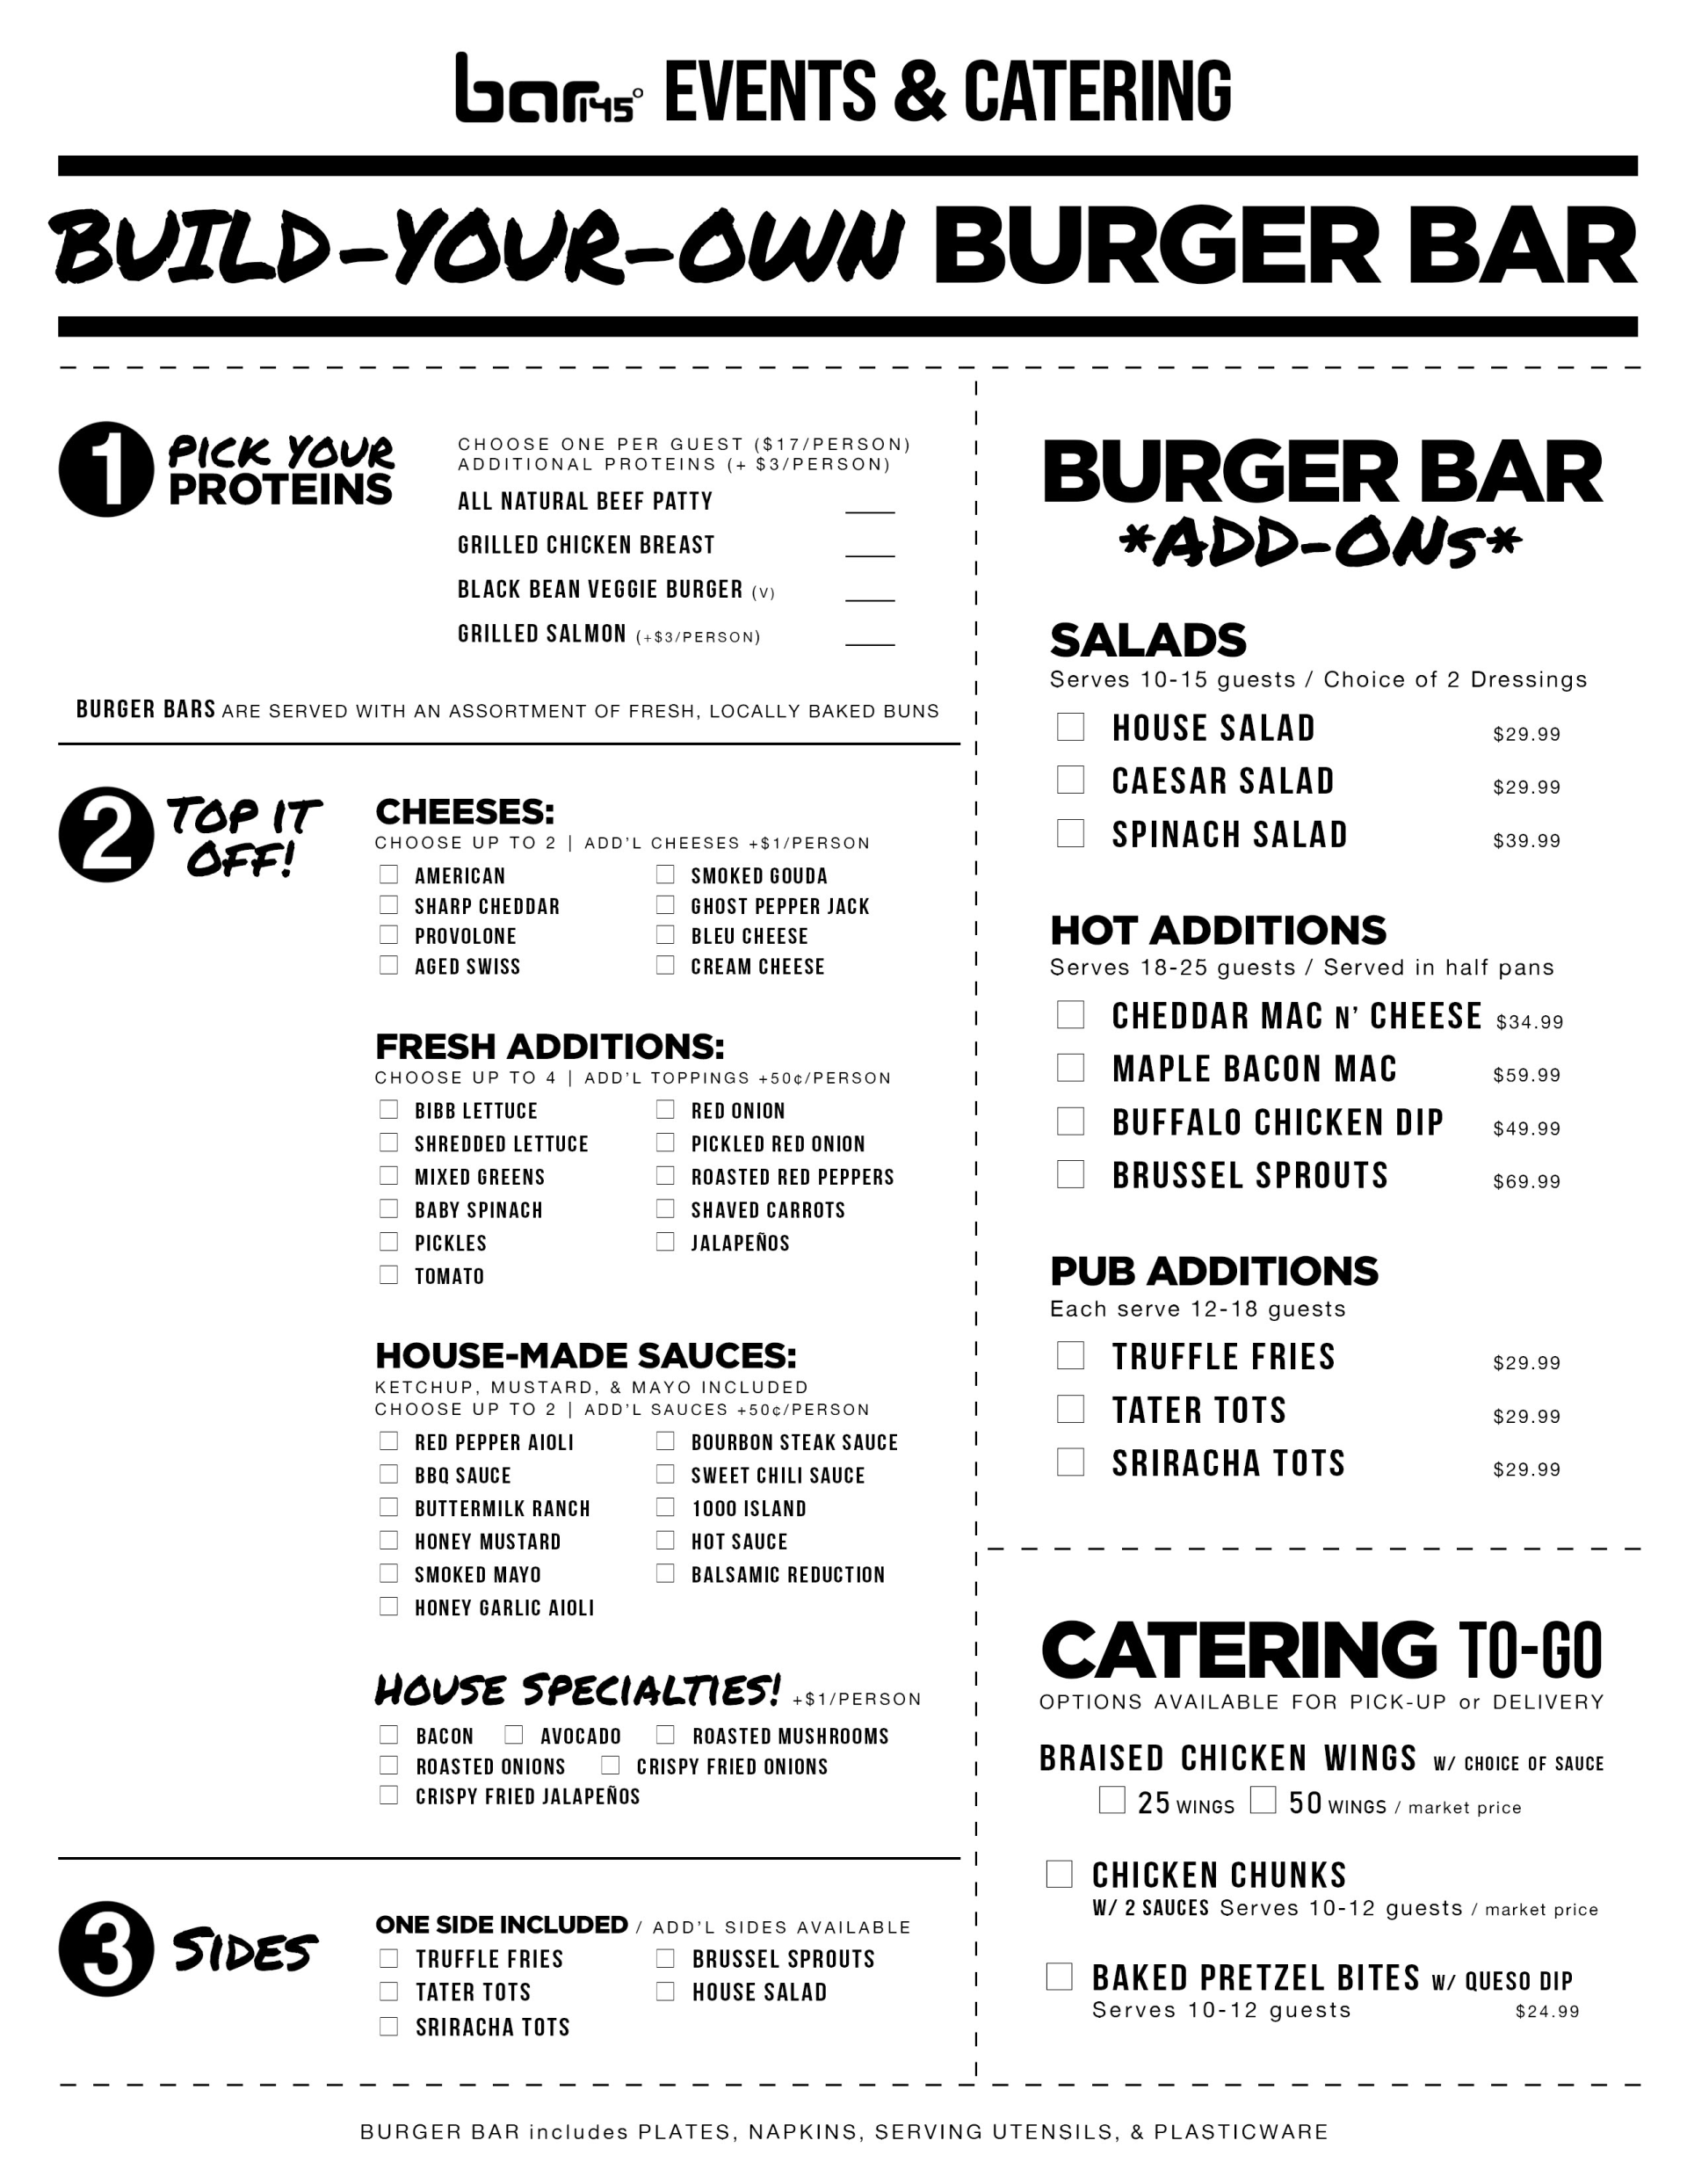 Reset Arcade / Bar 145 - Events and Catering, Burger Bar - Toledo, Ohio